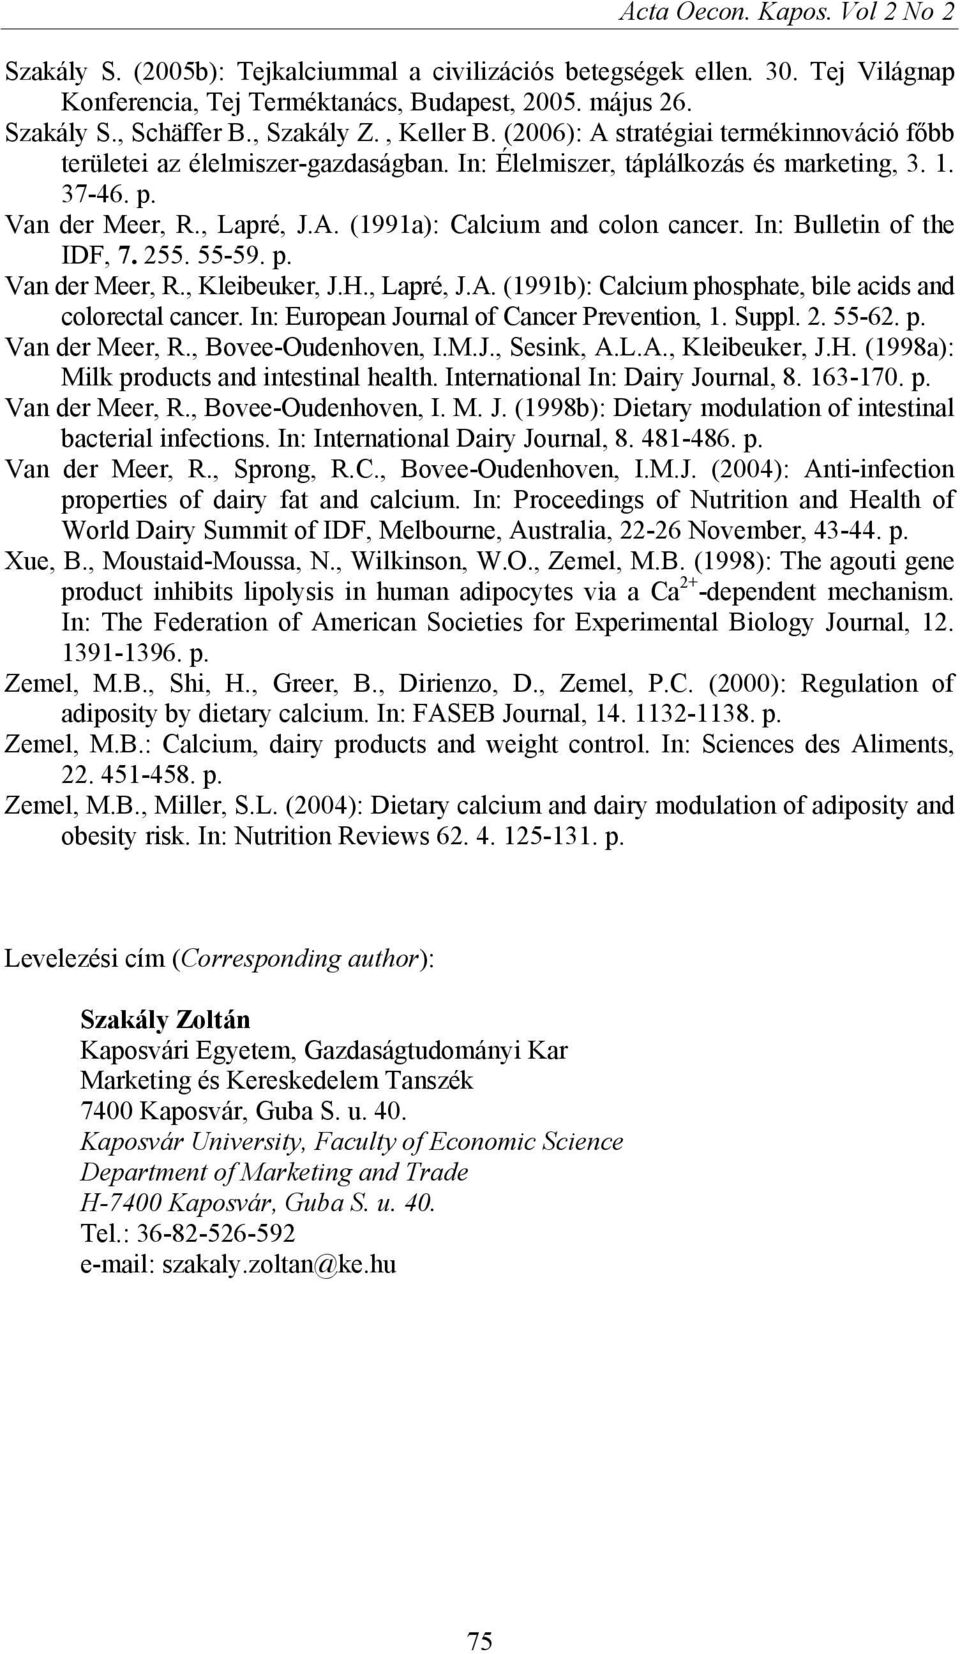 In: Bulletin of the IDF, 7. 255. 55-59. p. Van der Meer, R., Kleibeuker, J.H., Lapré, J.A. (1991b): Calcium phosphate, bile acids and colorectal cancer. In: European Journal of Cancer Prevention, 1.